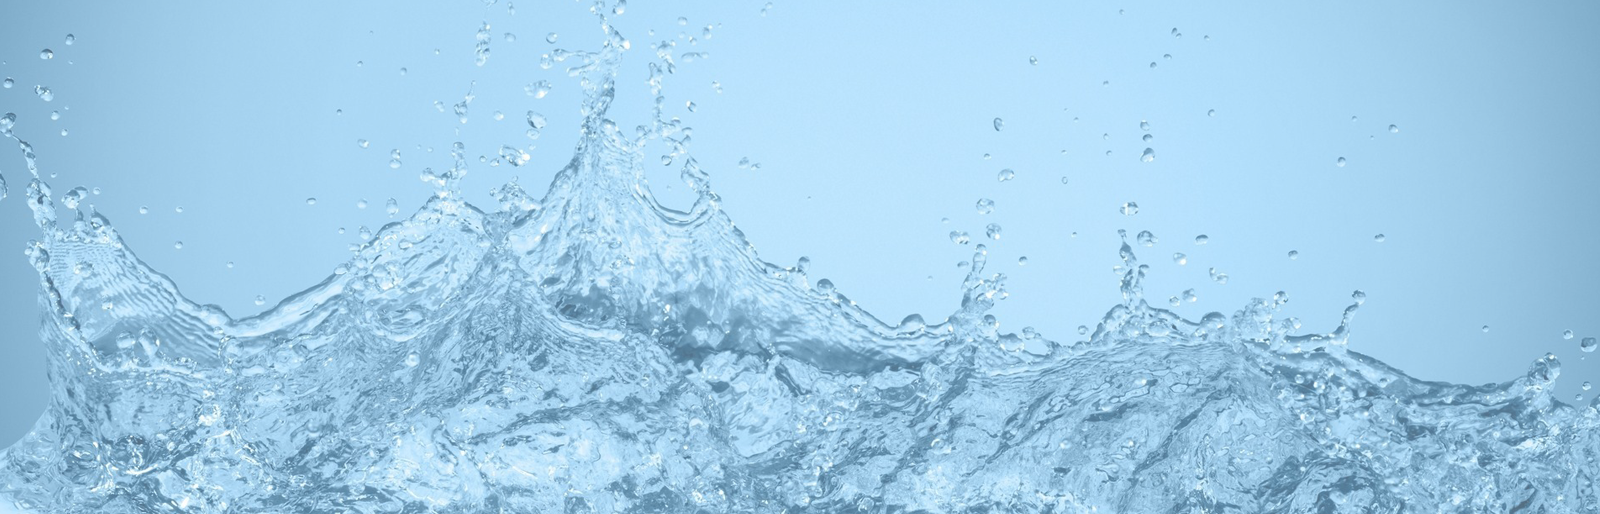 water splashing water with blue background